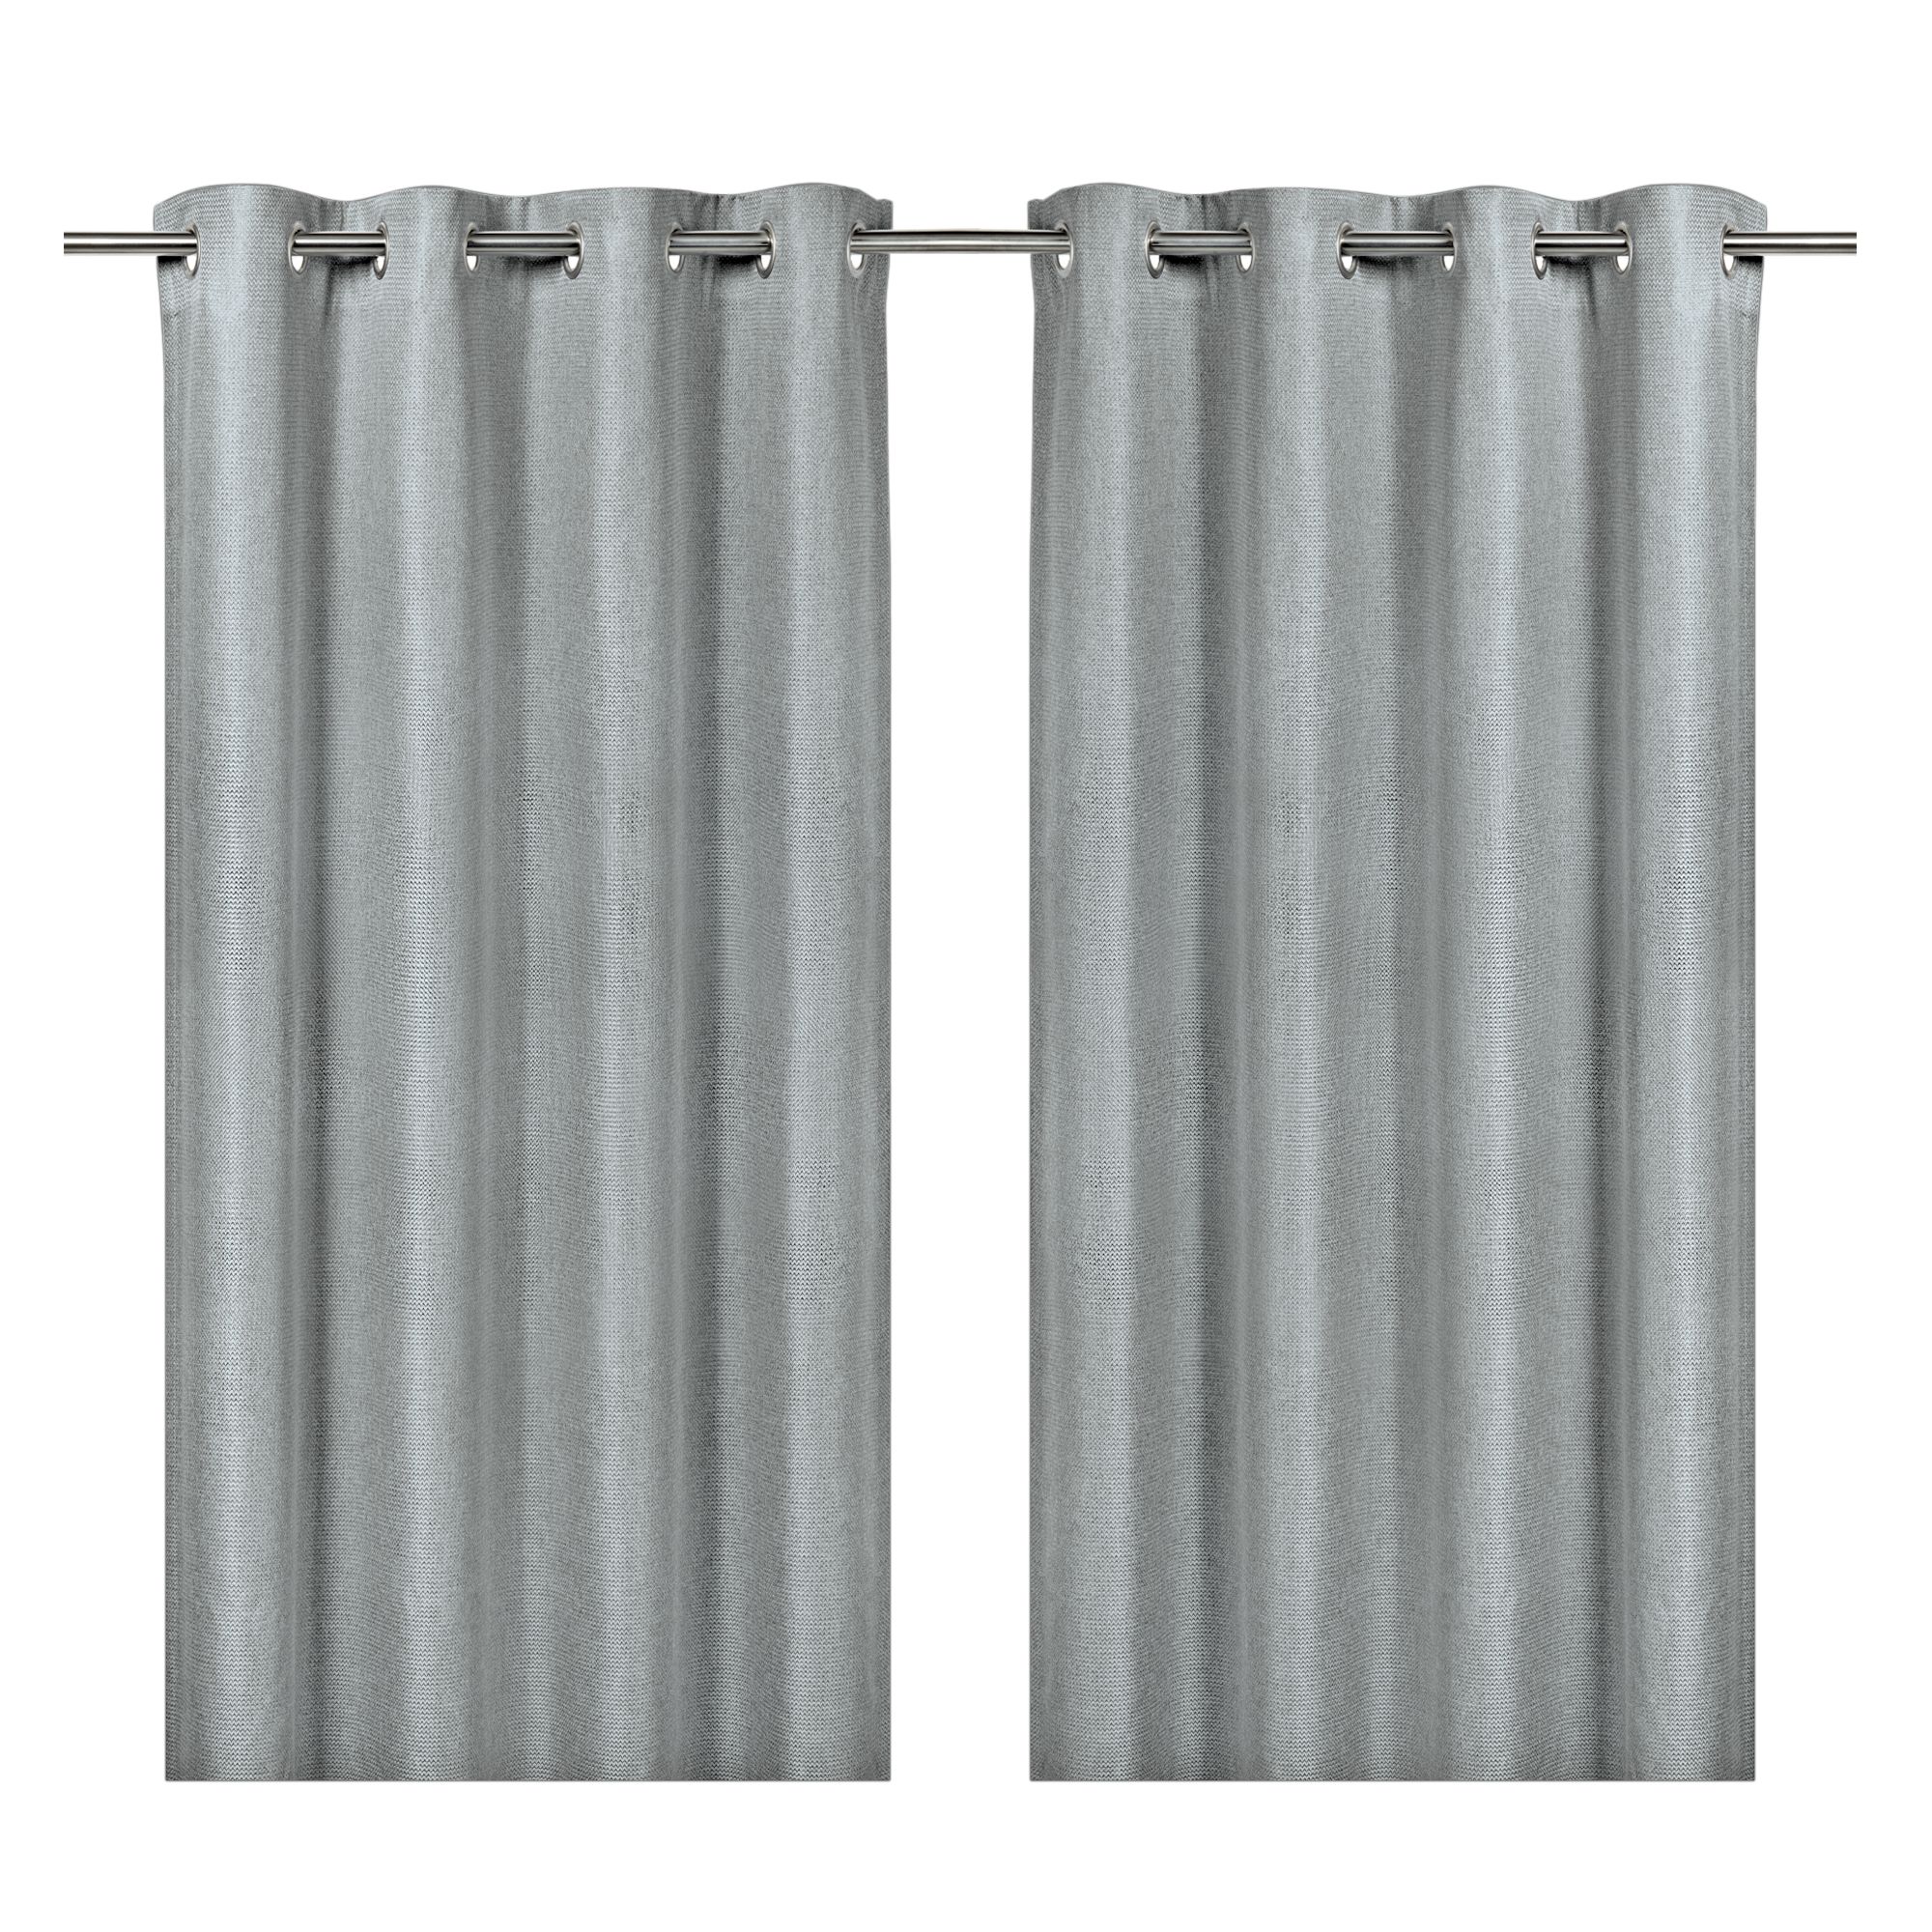 Moggo Light grey Chevron Lined Eyelet Curtain (W)117cm (L)137cm, Pair